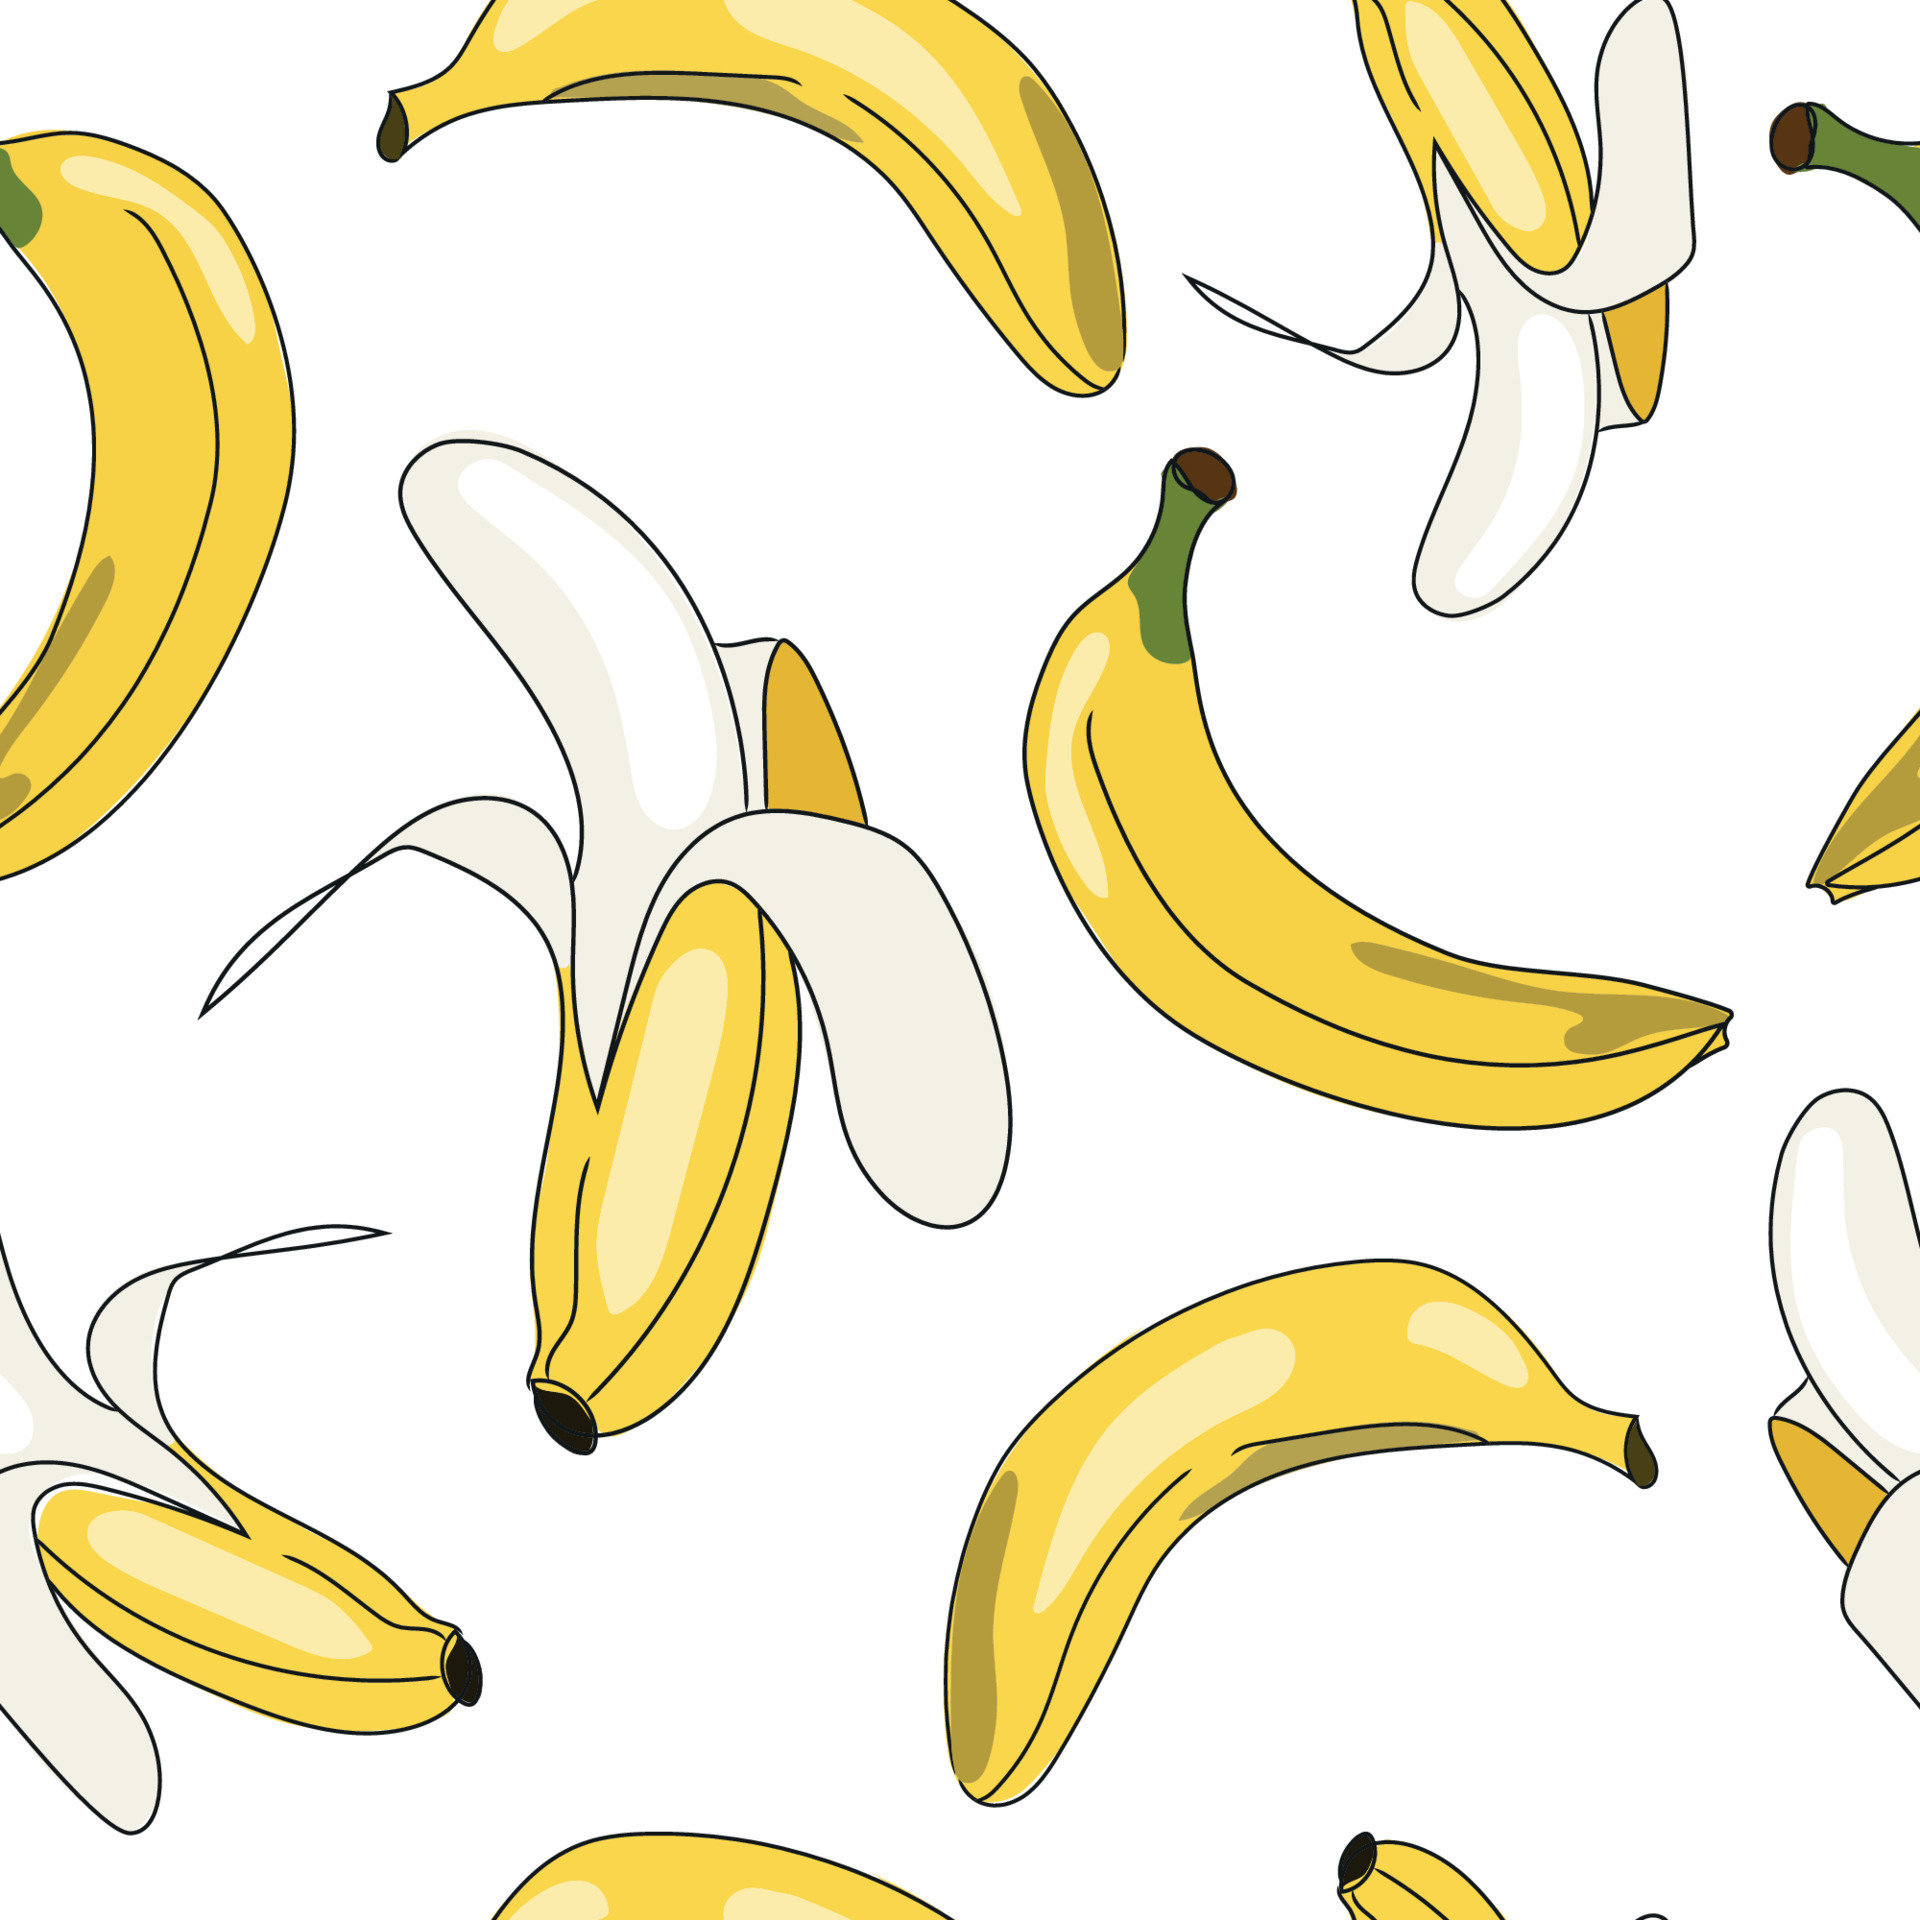 Free and customizable banana templates